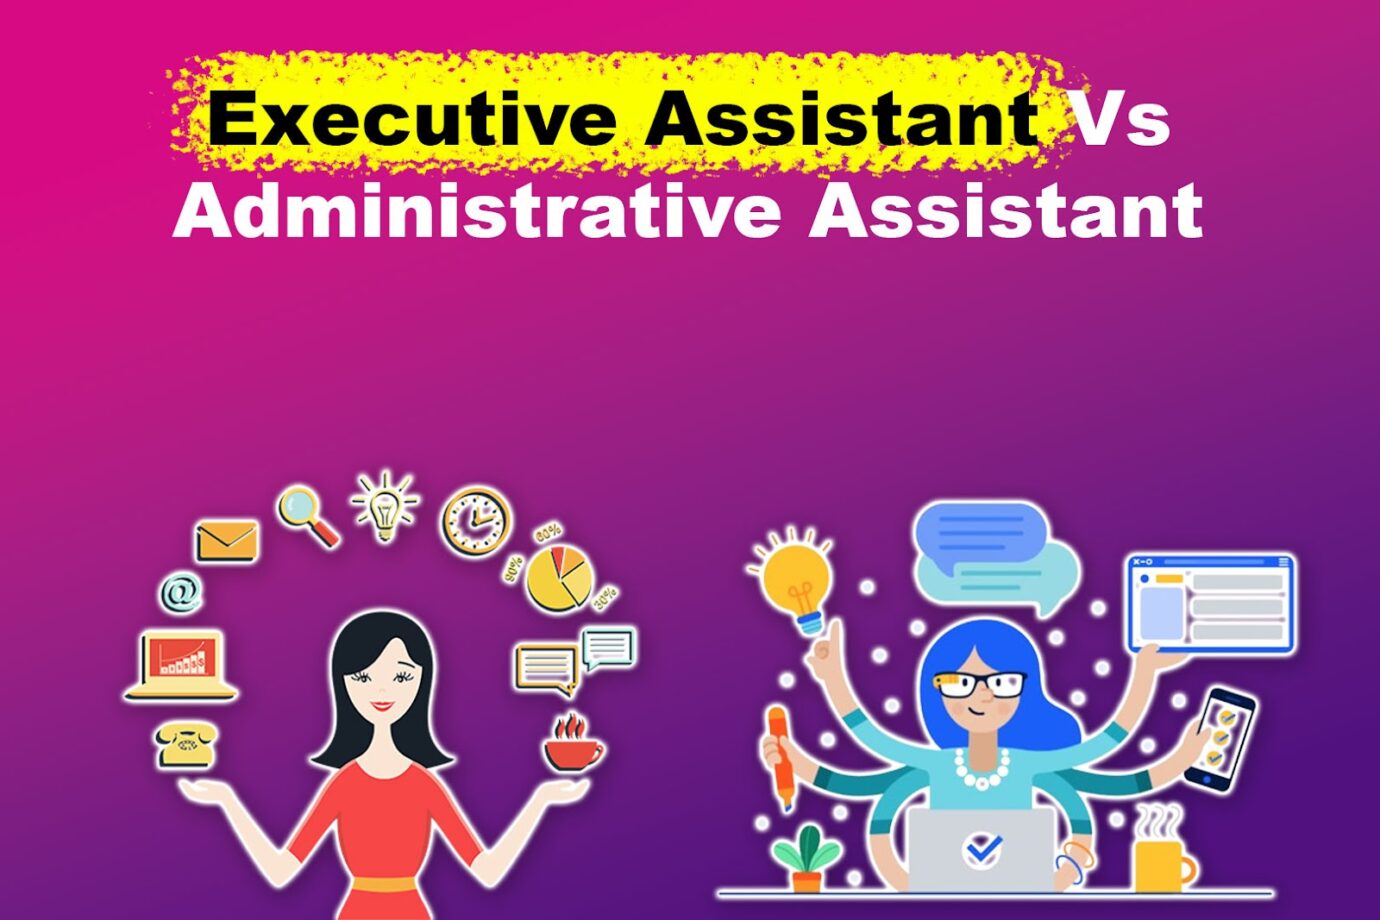 Executive Versus Administrative Assistant